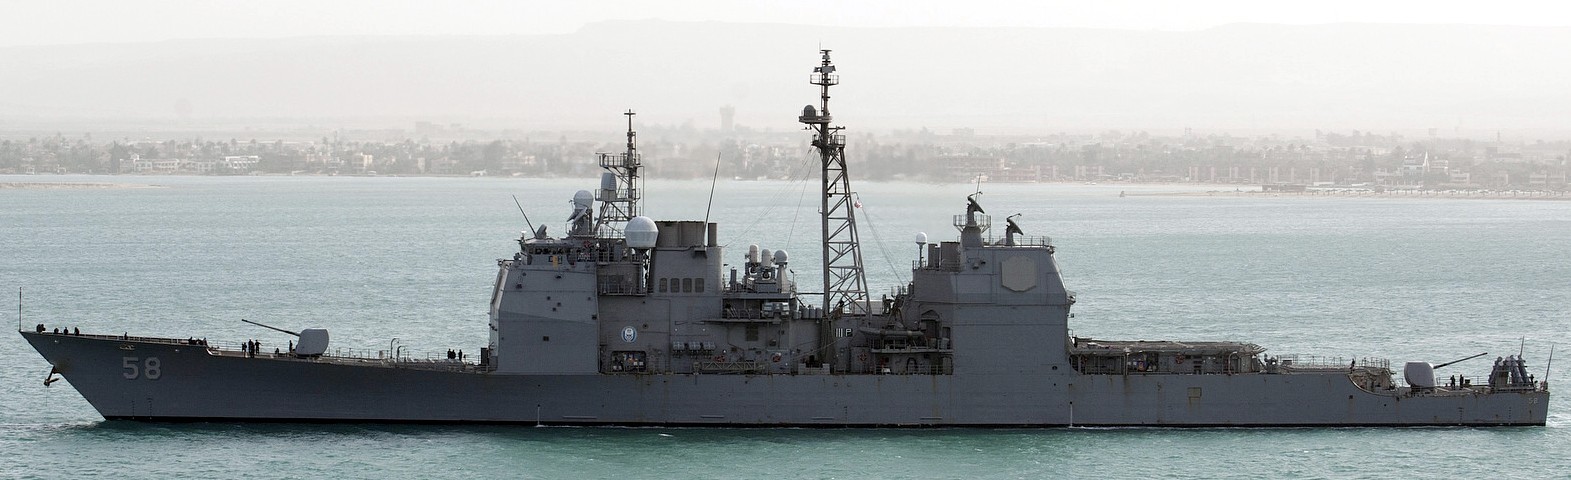 cg-58 uss philippine sea ticonderoga class guided missile cruiser aegis us navy suez canal 47